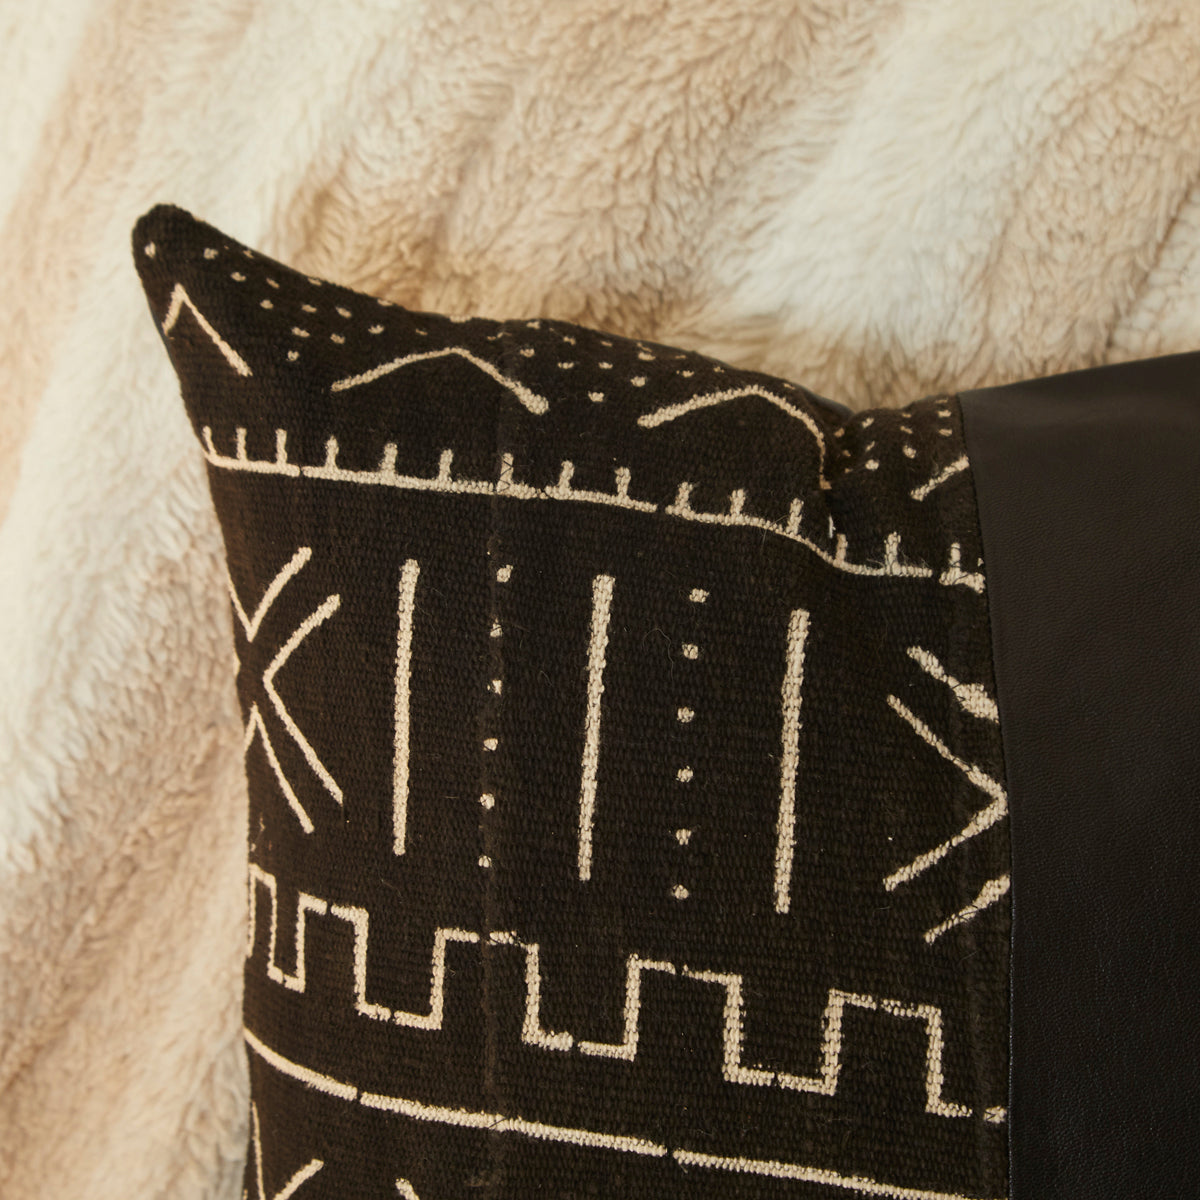 Asili Mudcloth & Leather Pillow, Black Home Goods RoHo Goods 